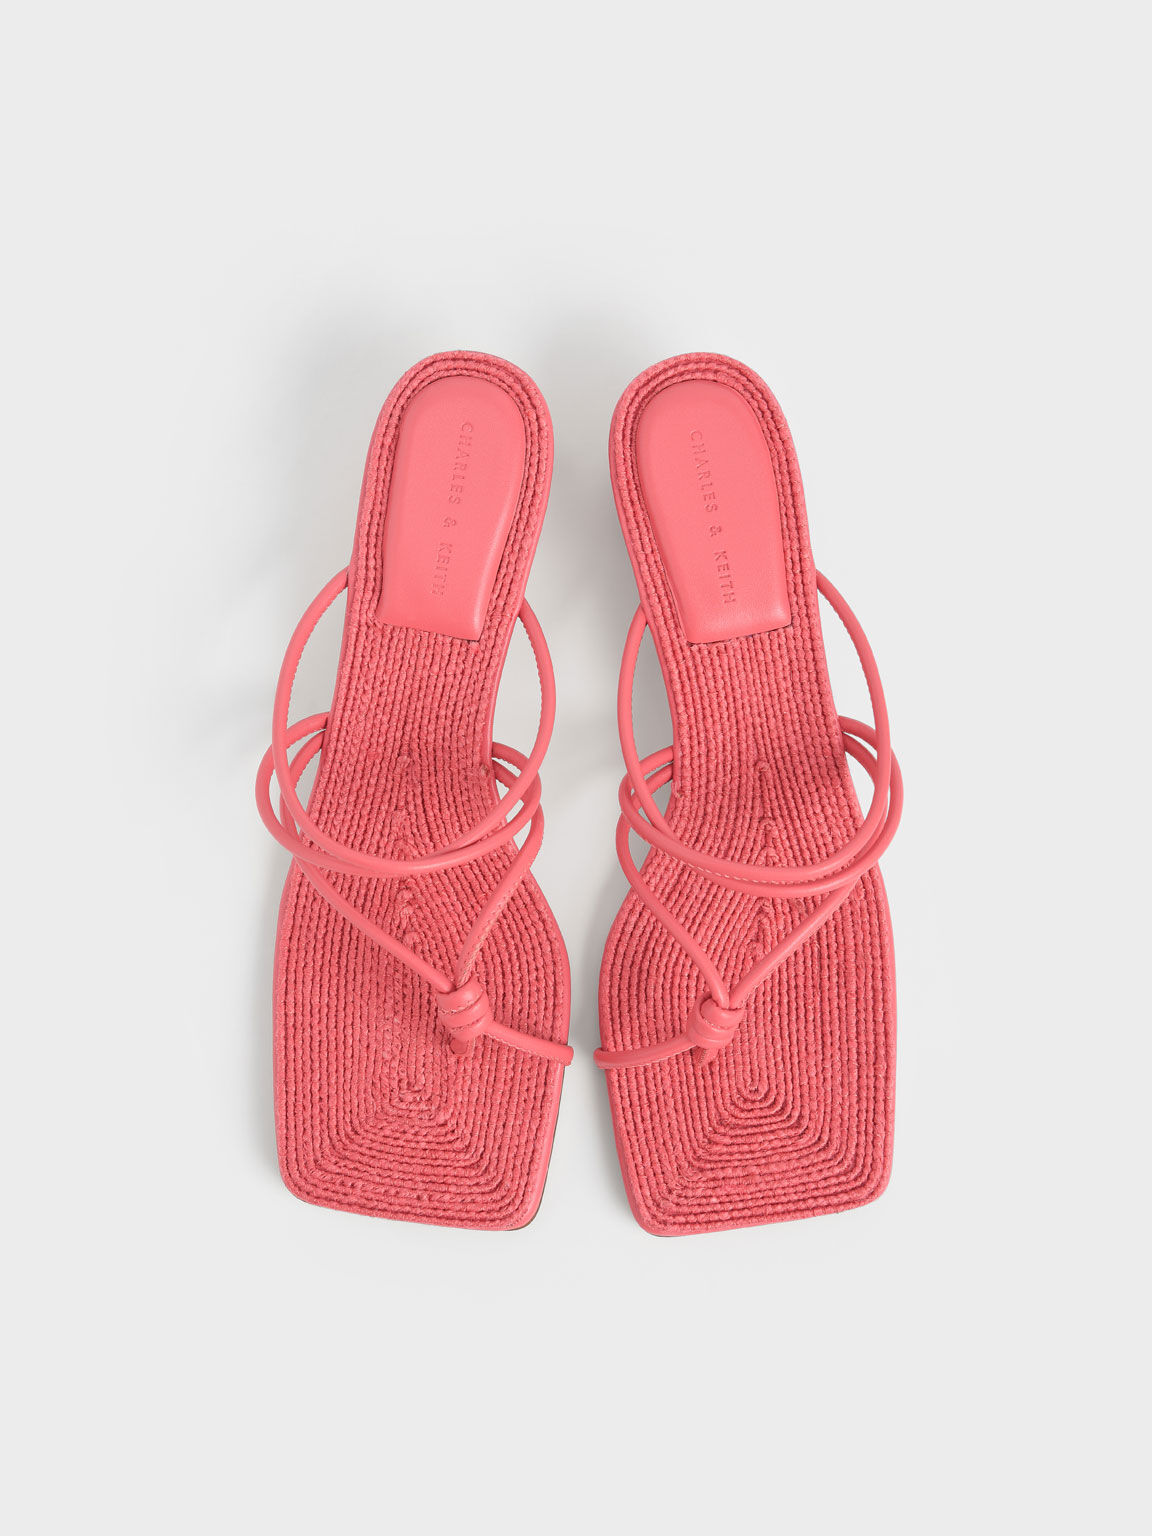 Toe Loop Strappy Heeled Sandals, Red, hi-res